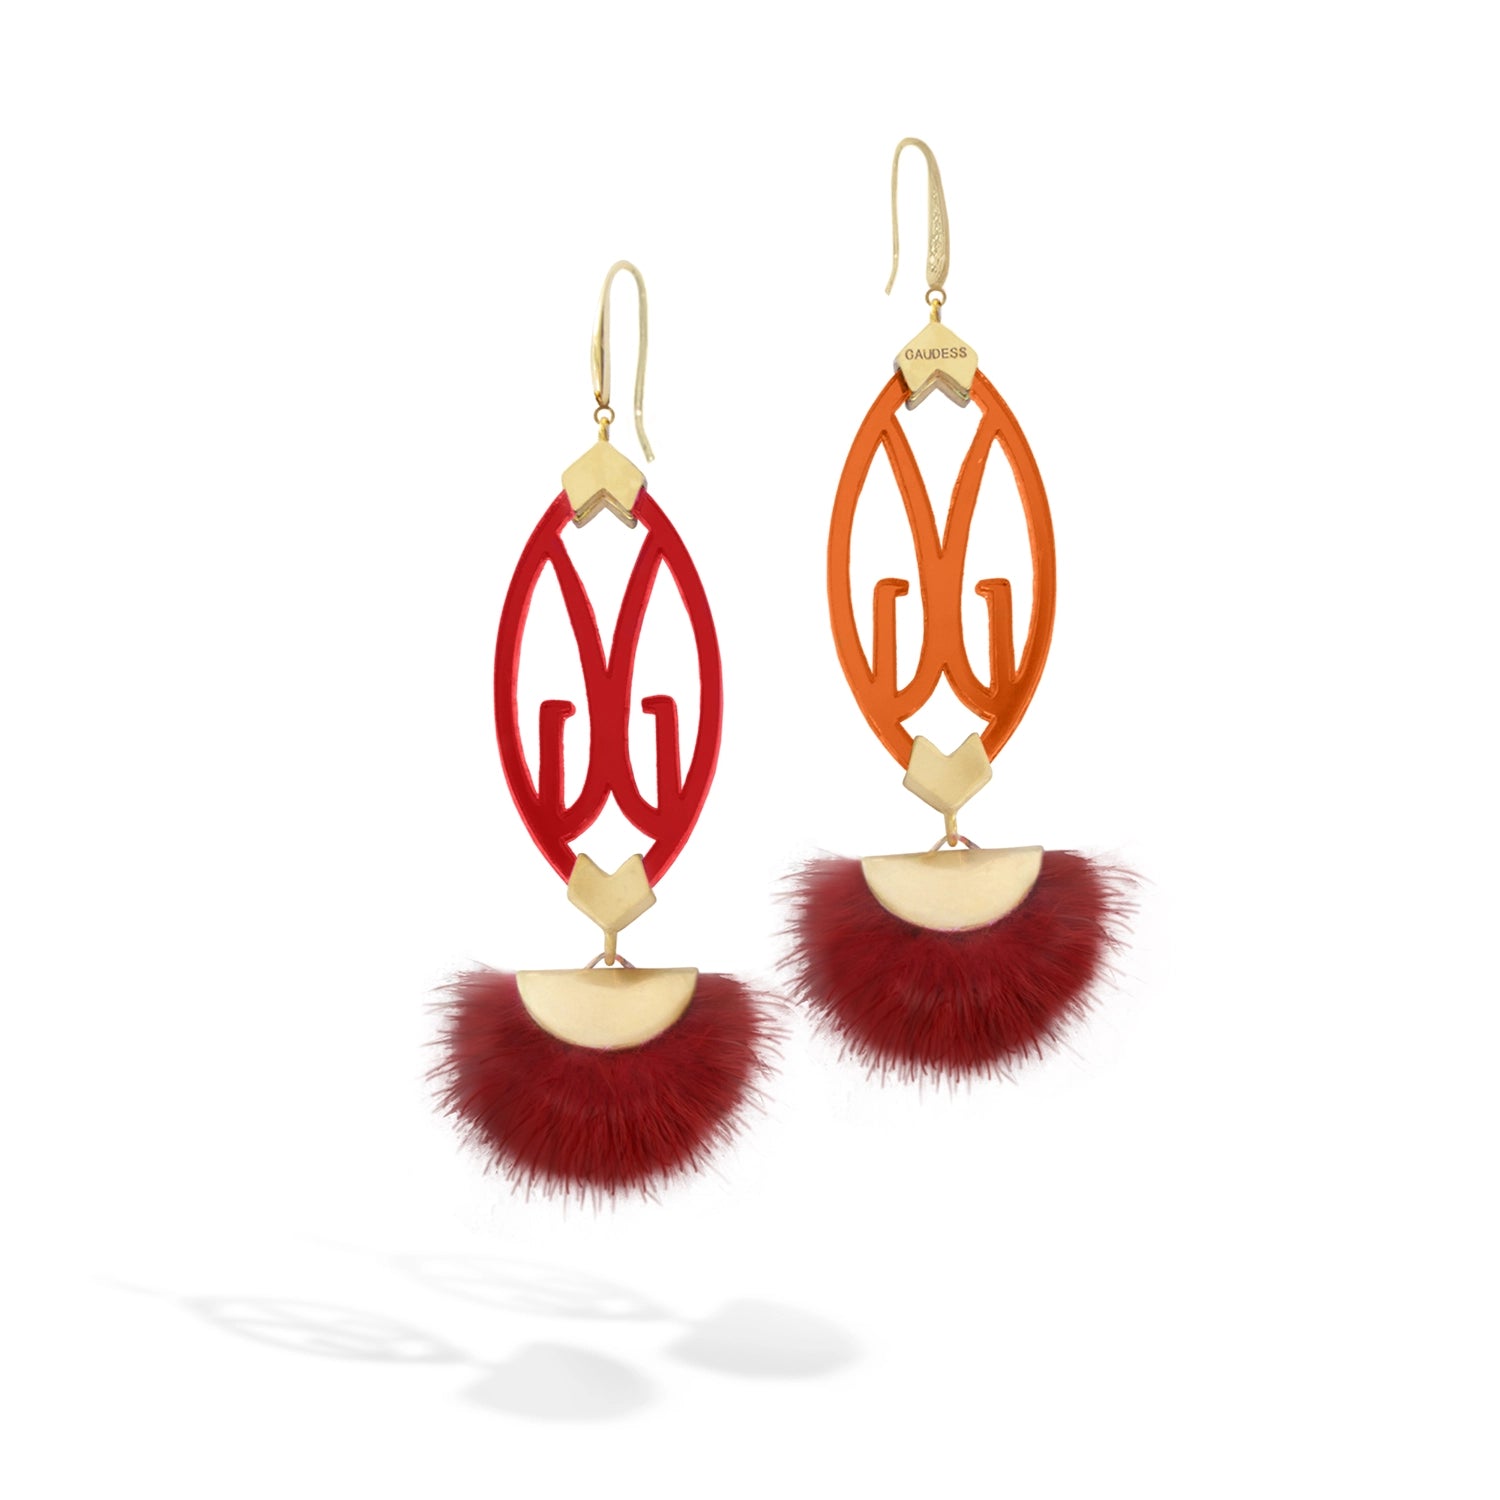 gaudess earrings pom pom red and orange